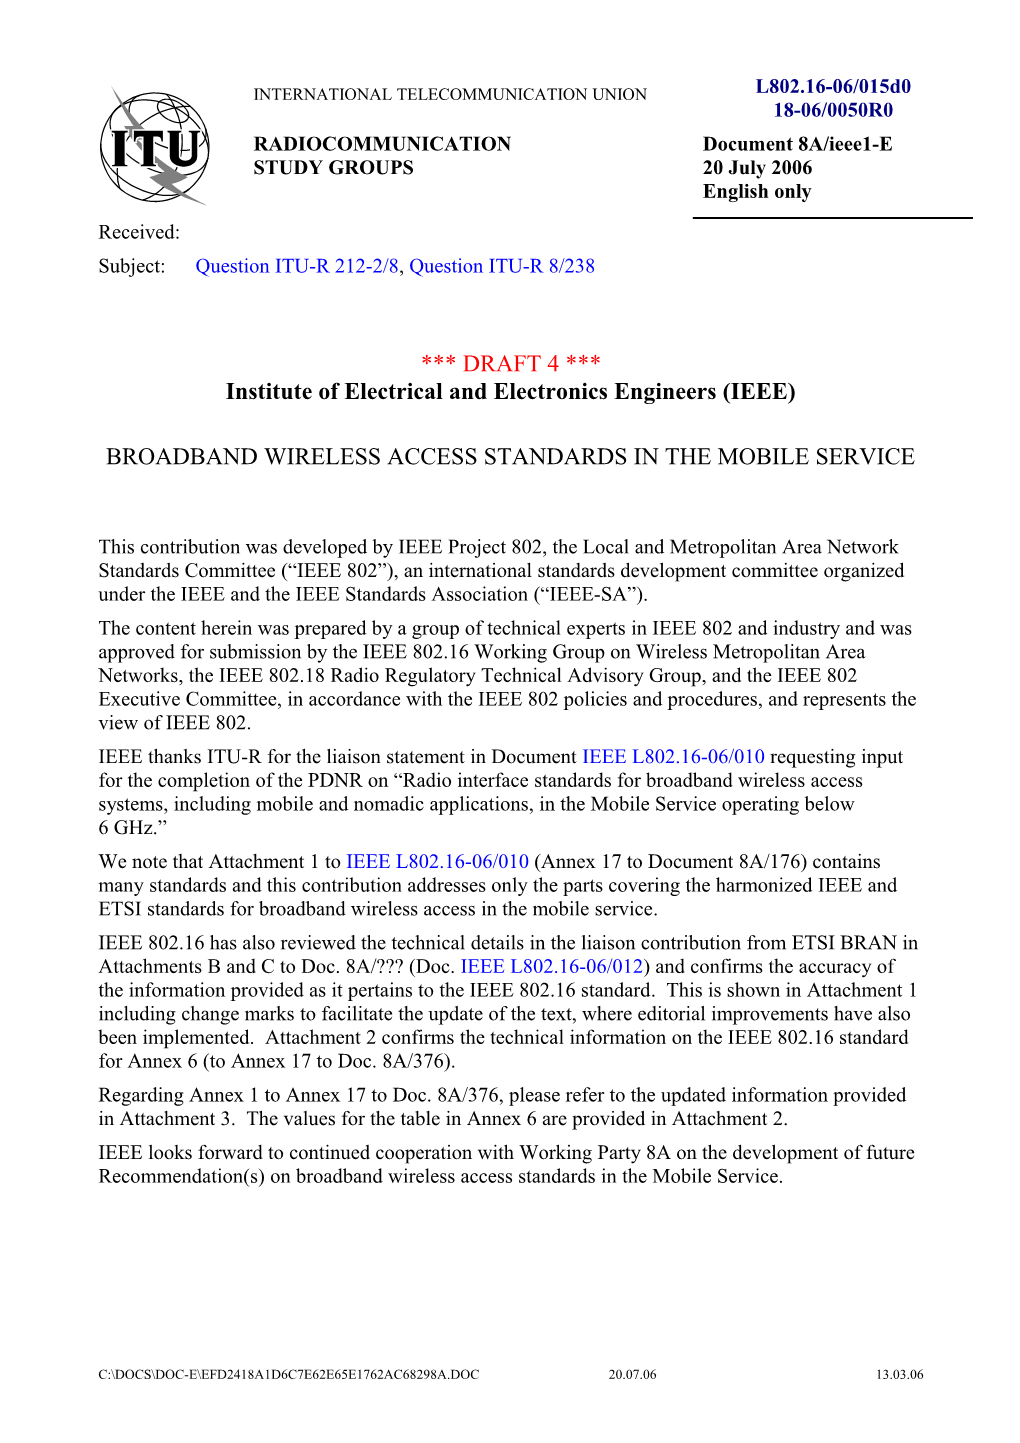 Subject:Question ITU-R 212-2/8, Question ITU-R 8/238